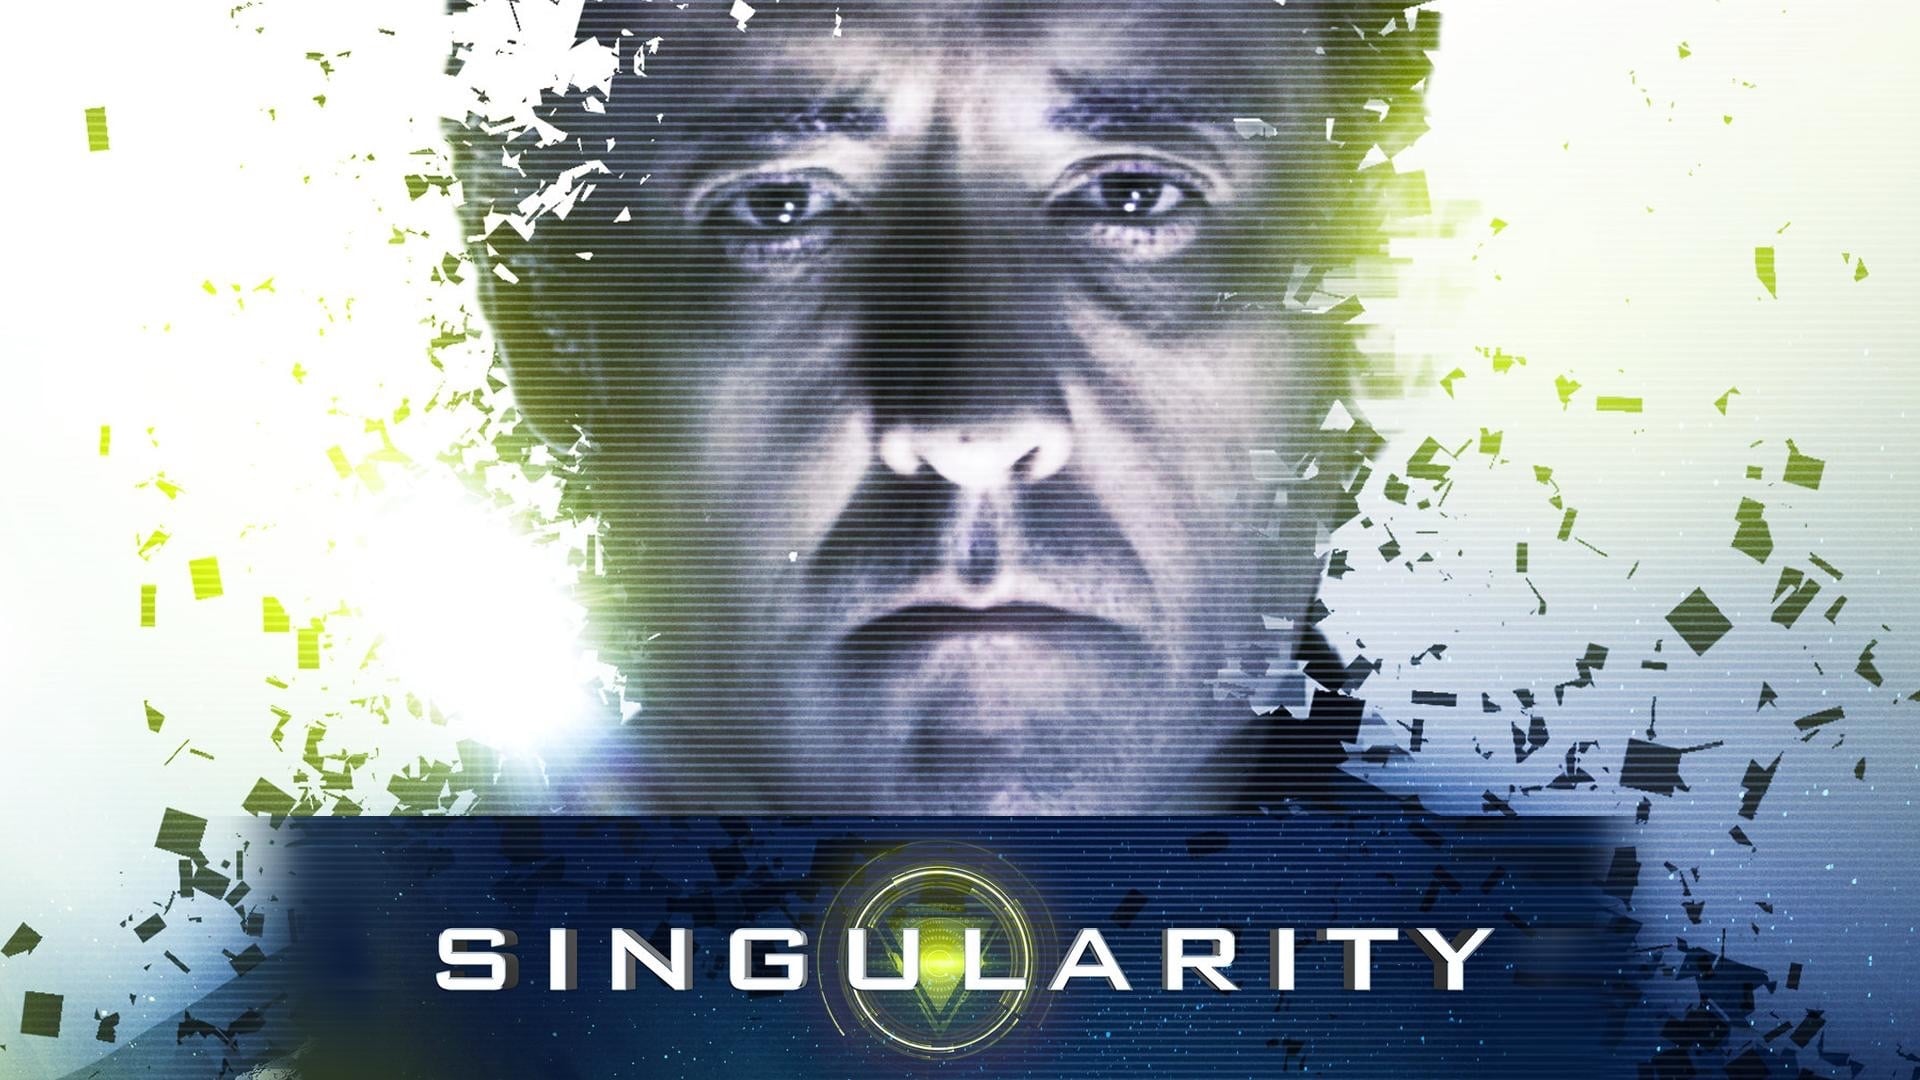 Singularity (2017)